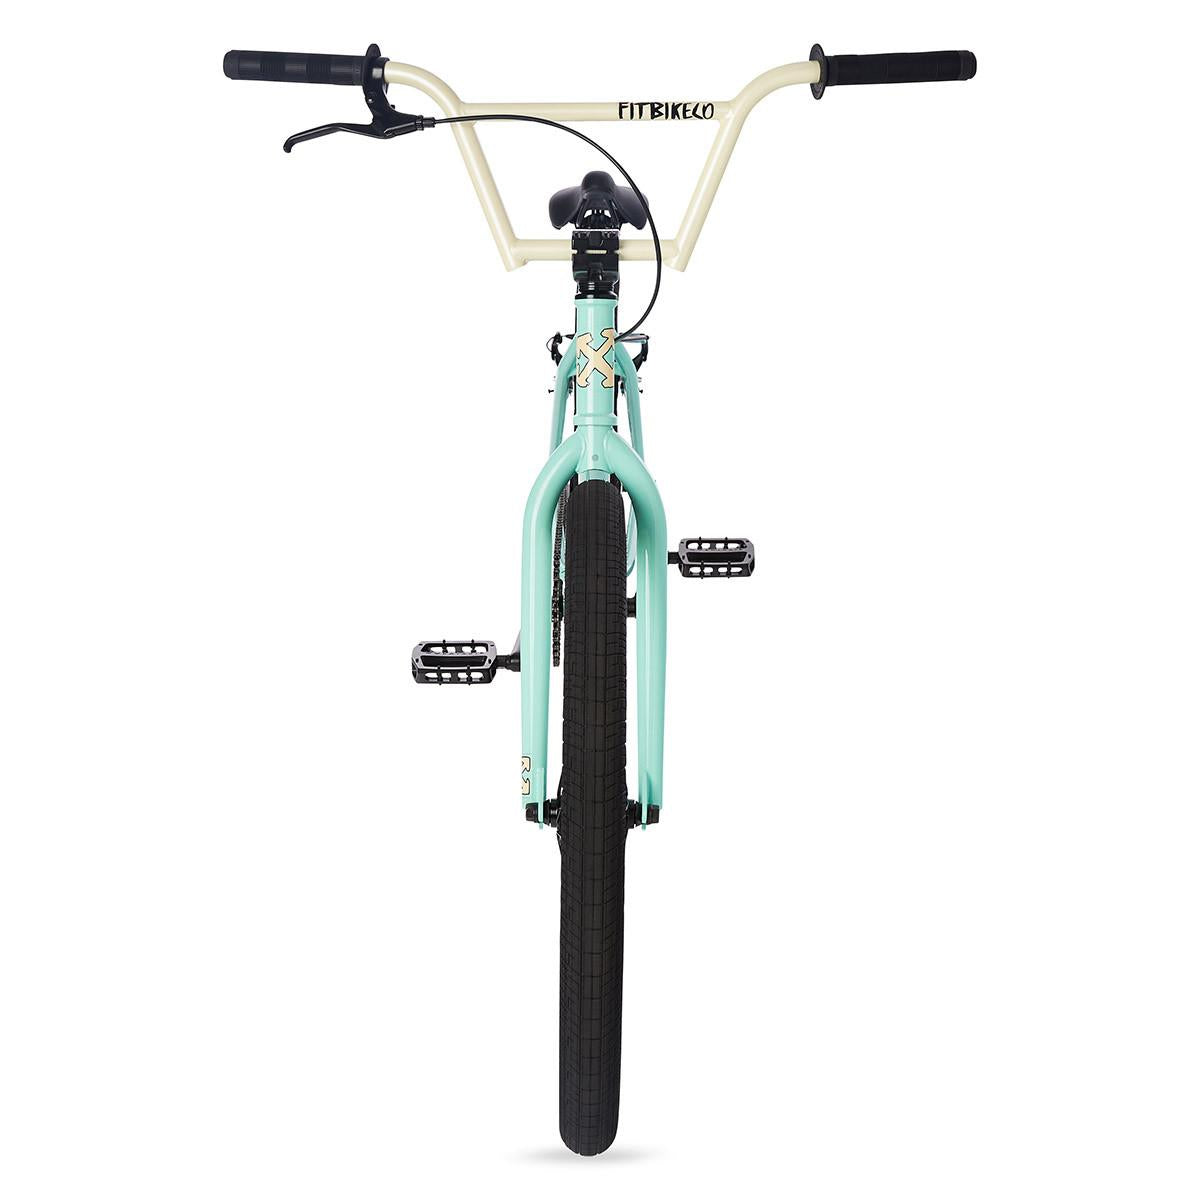 Fit CR 26 "BMX Bicicleta 2023